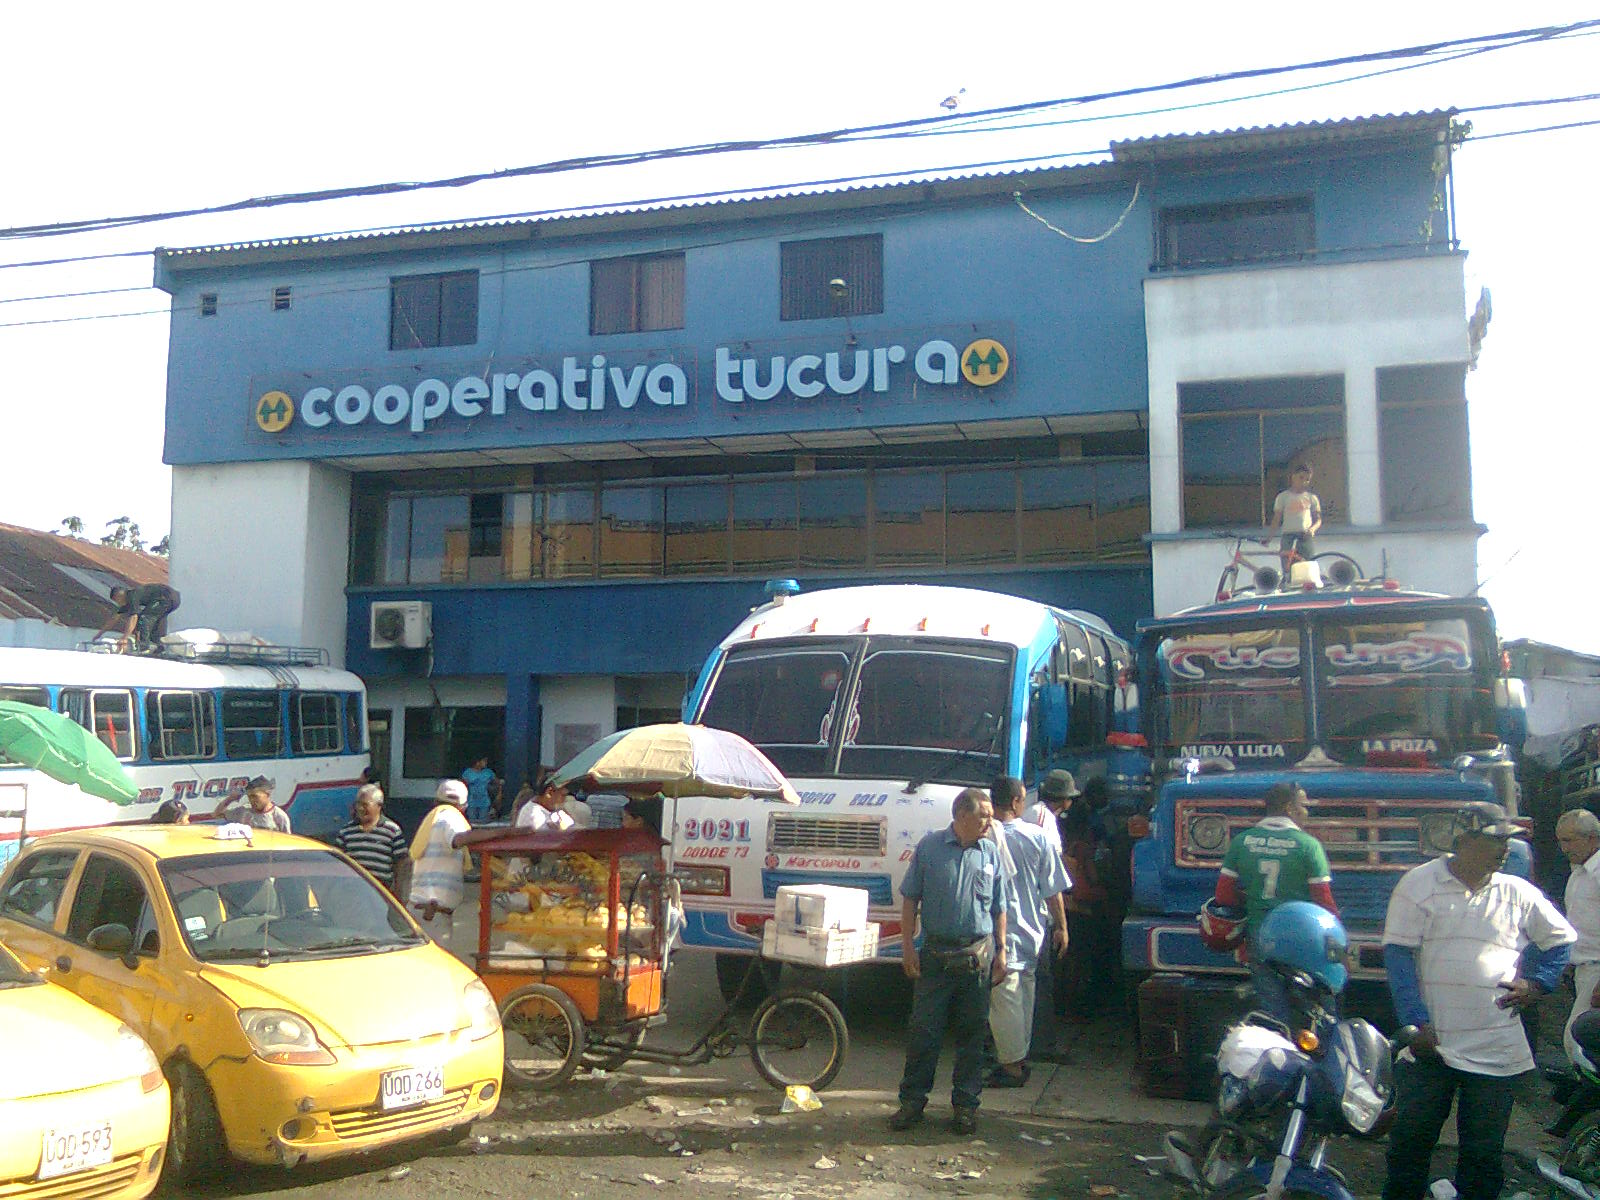 TUCURA LTDA (COOTRANSTUR). A TRANSPORTERS CO-OPERATIVE